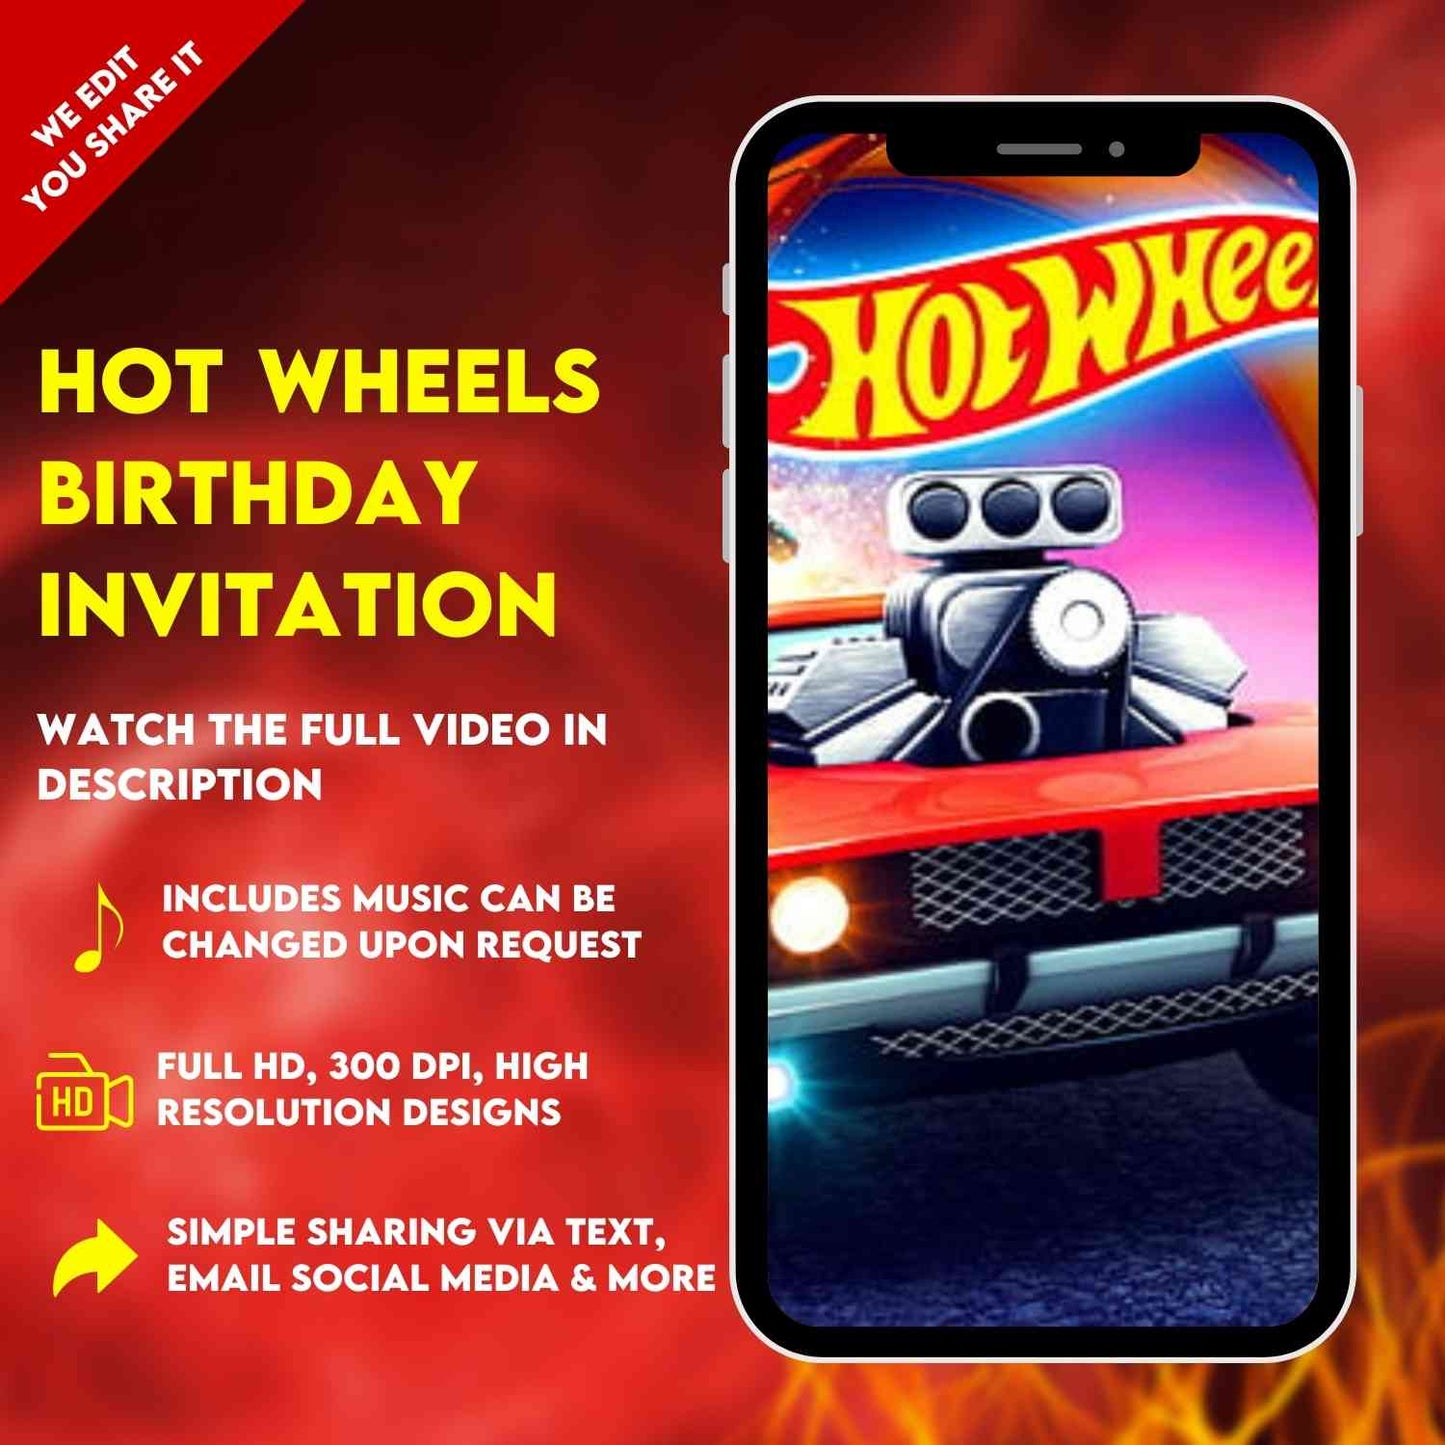 Rev up the Fun! Hot Wheels Birthday Party Video Invitation